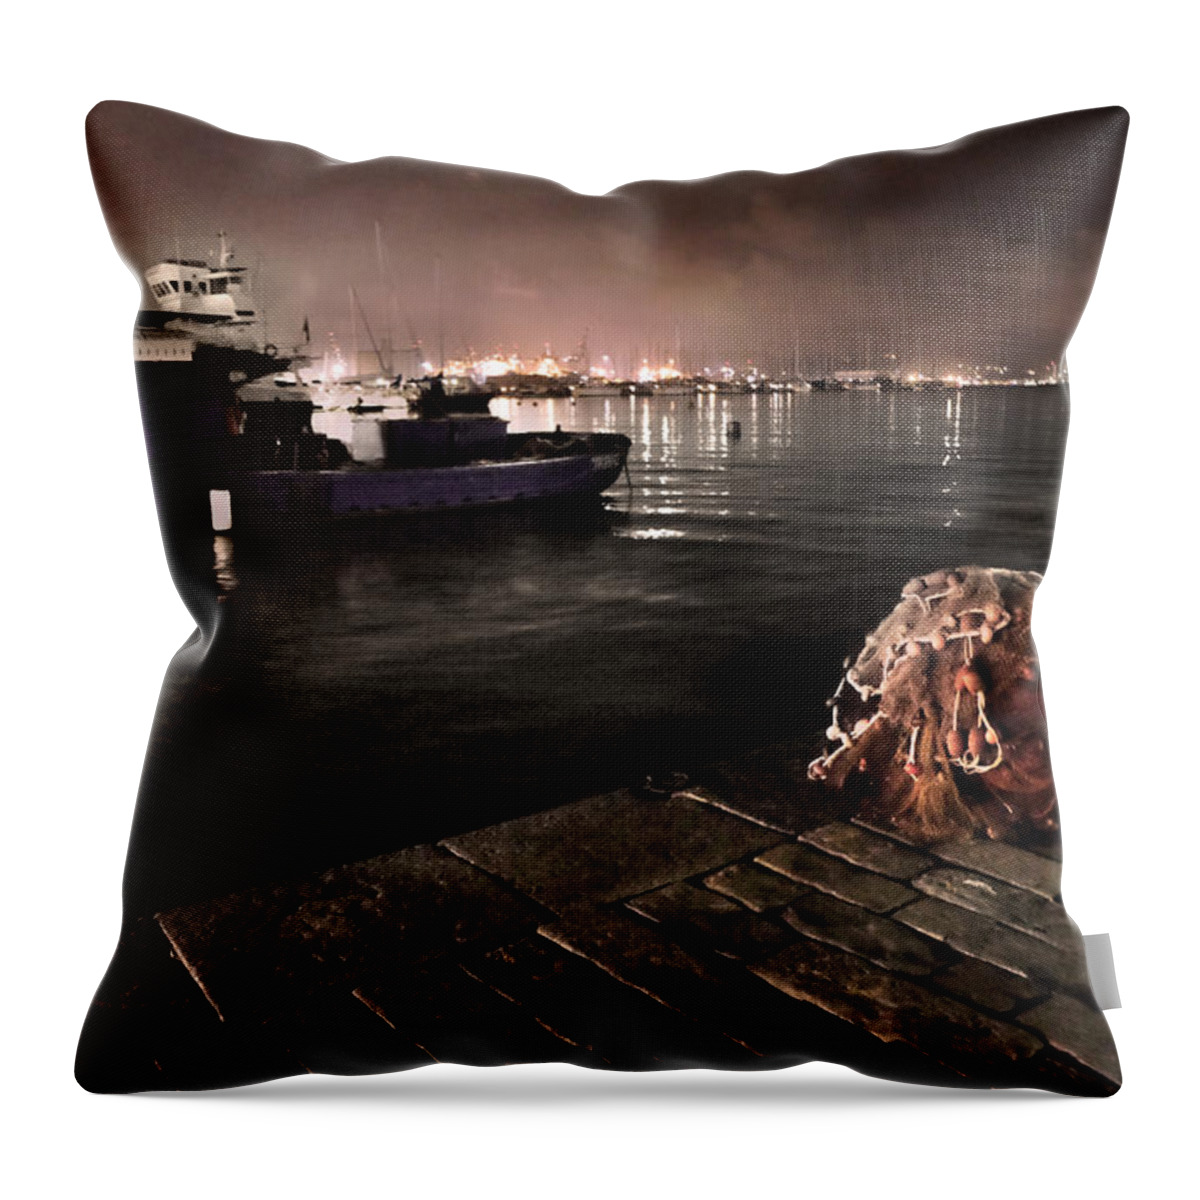 La Spezia Harbor Nocturne Throw Pillow featuring the digital art La Spezia Harbor Nocturne by William Fields